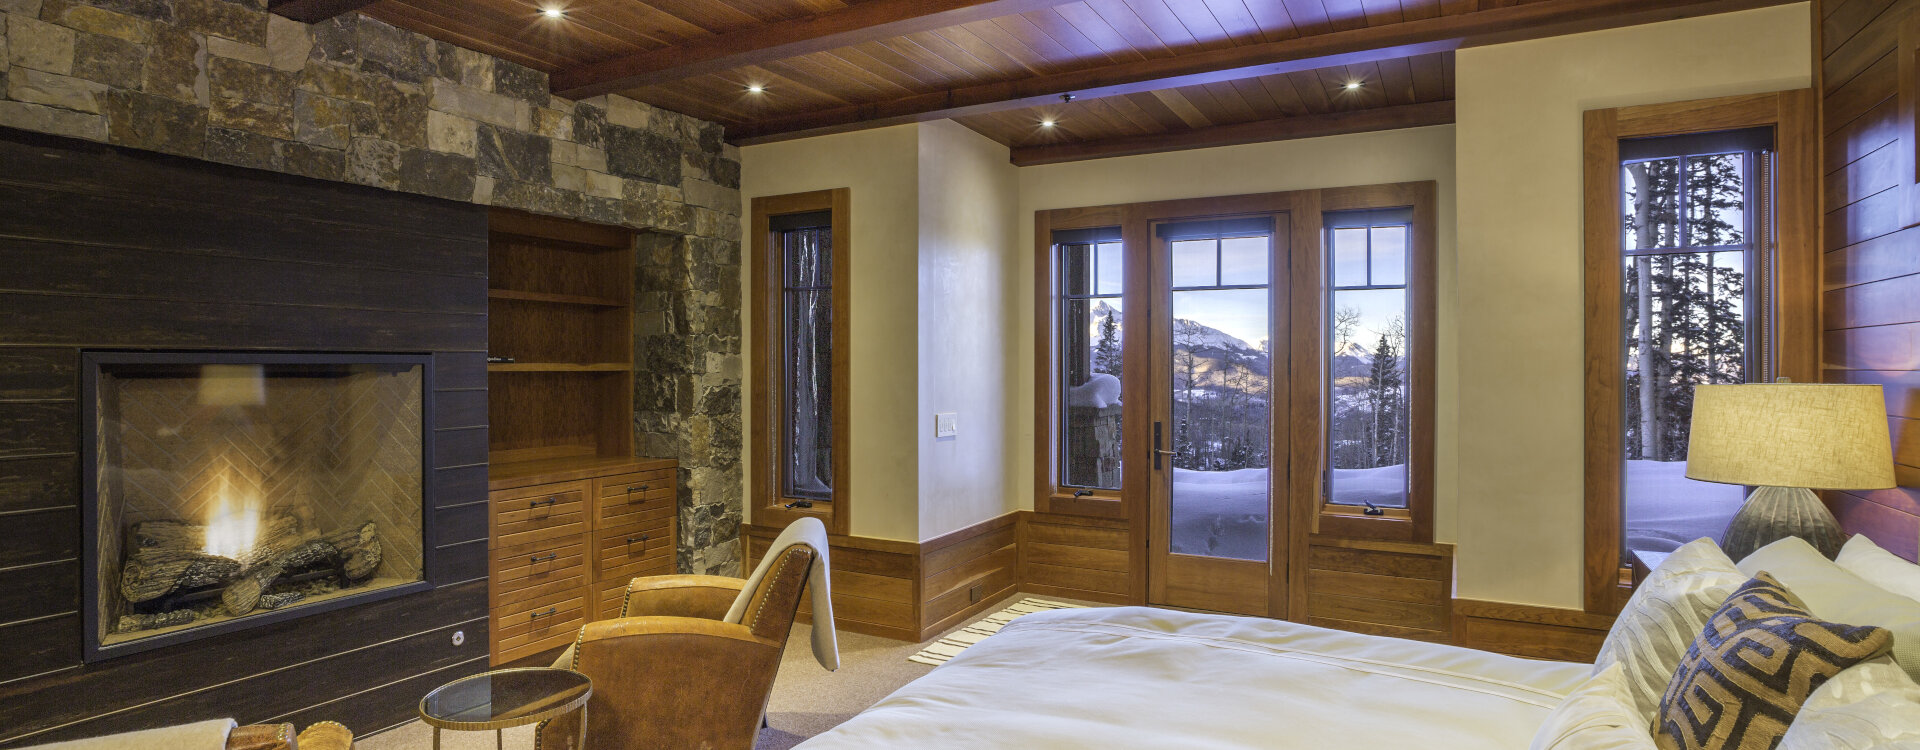 7.02-telluride-cabin-on-the-ridge-primary-bedroom-fireplace